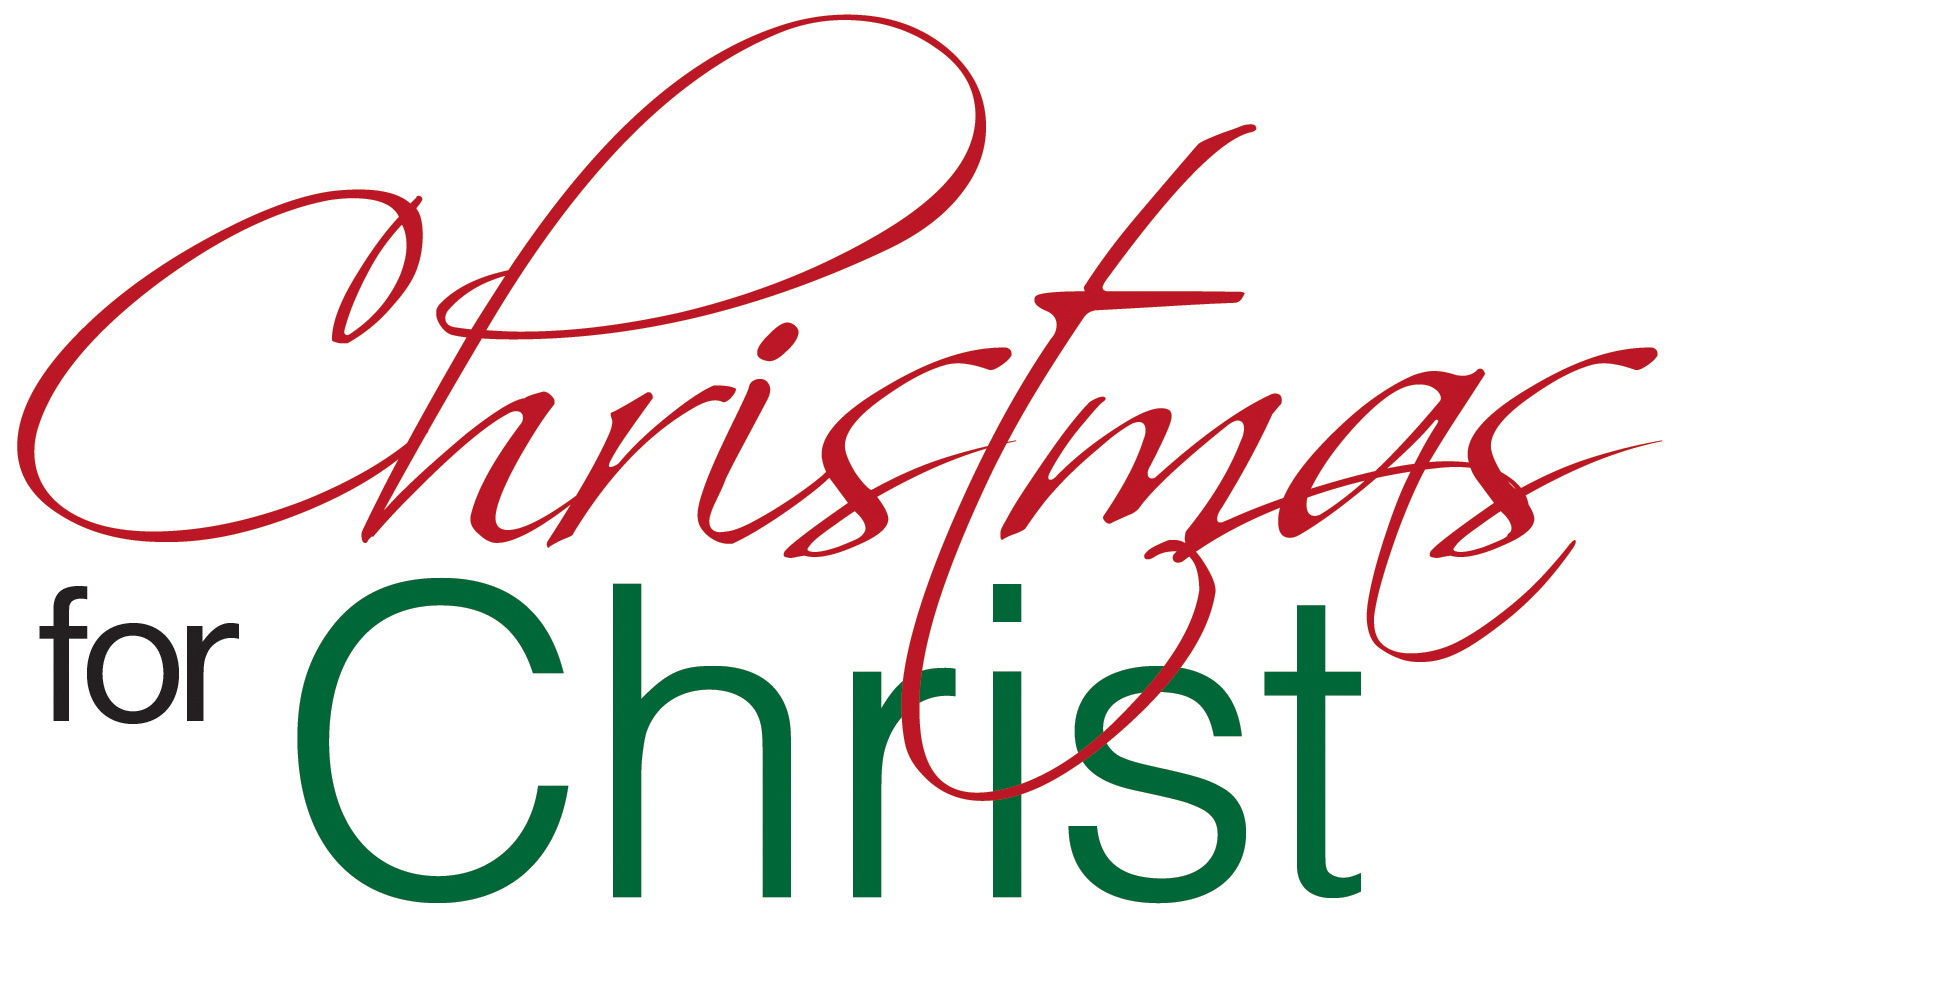 Christian Christmas Nail Clip Art - wide 2